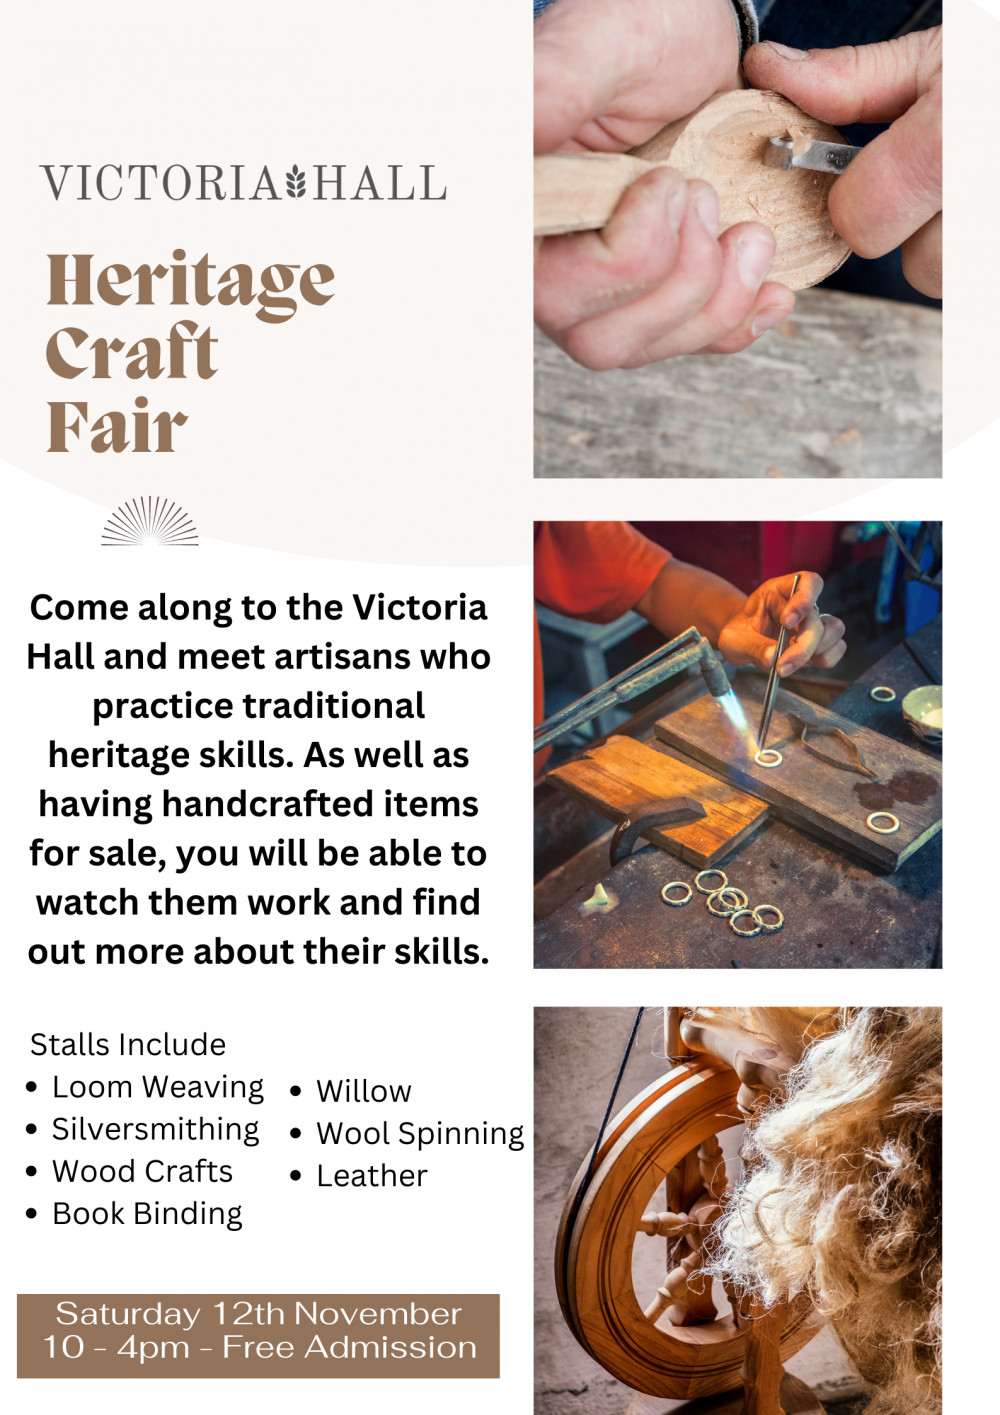 Heritage Fair flyer